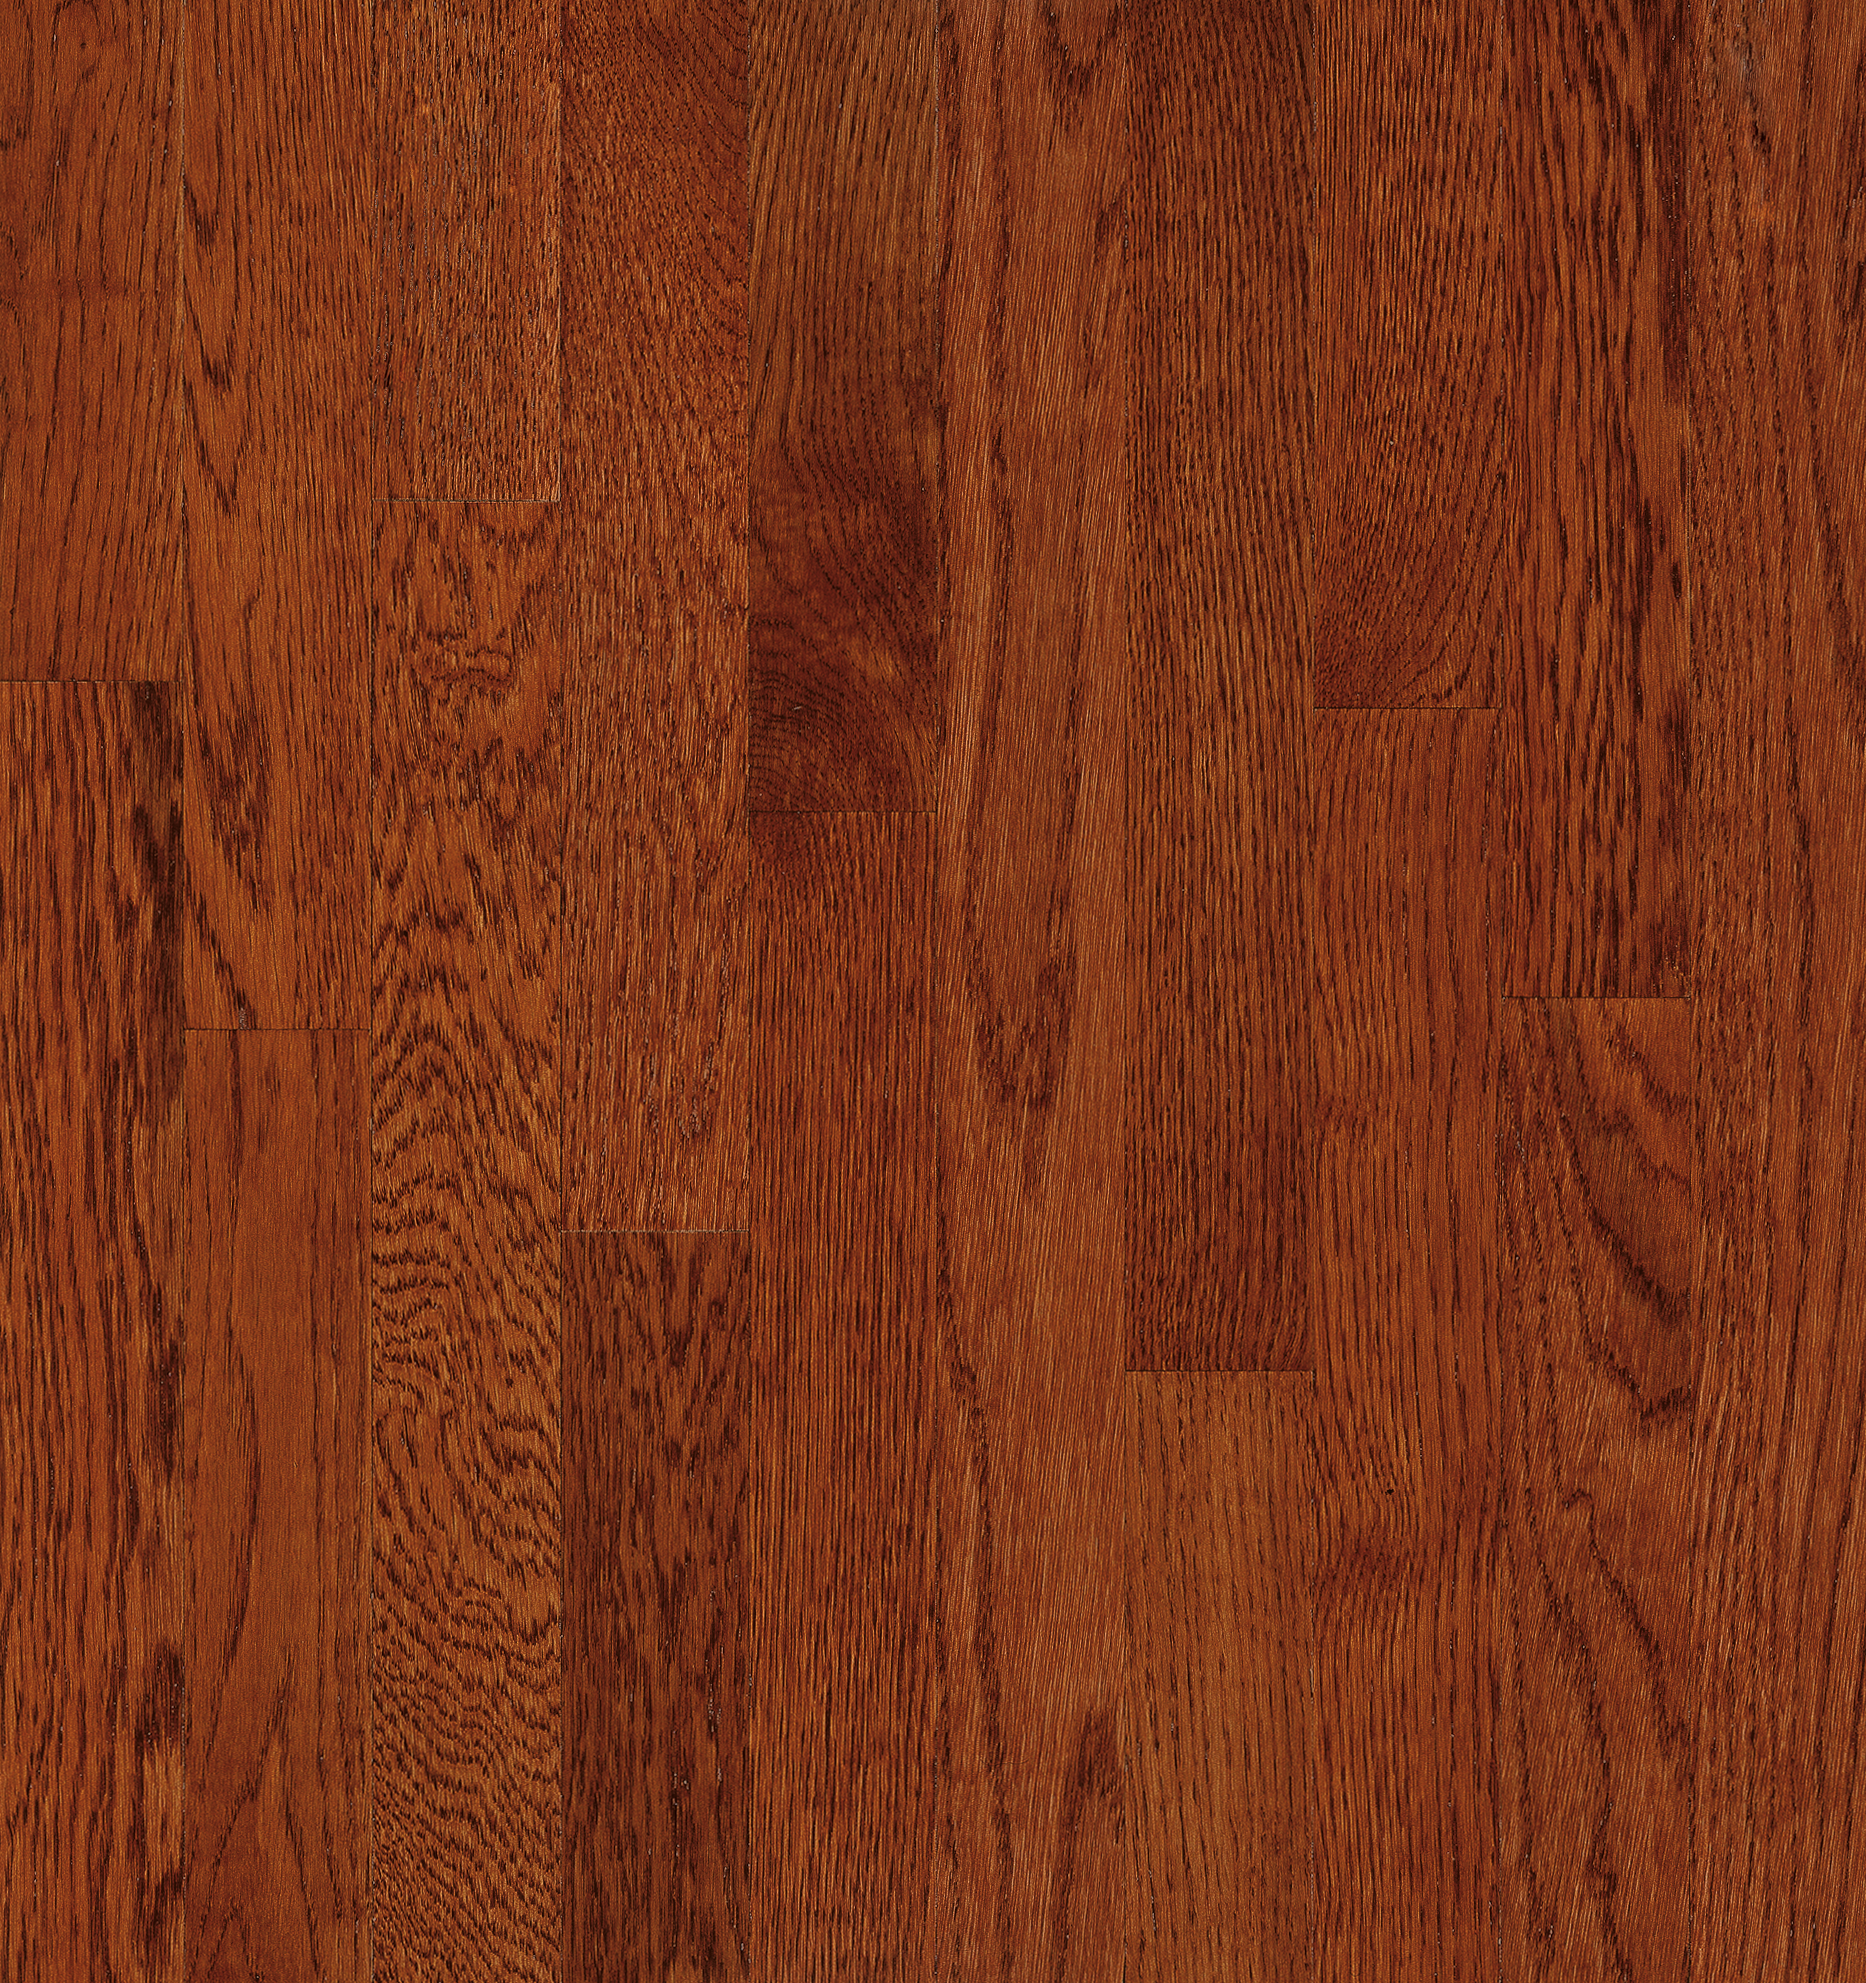 Amber 2 1 4 In Oak Solid Hardwood C5060, Bruce Hardwood Flooring Samples